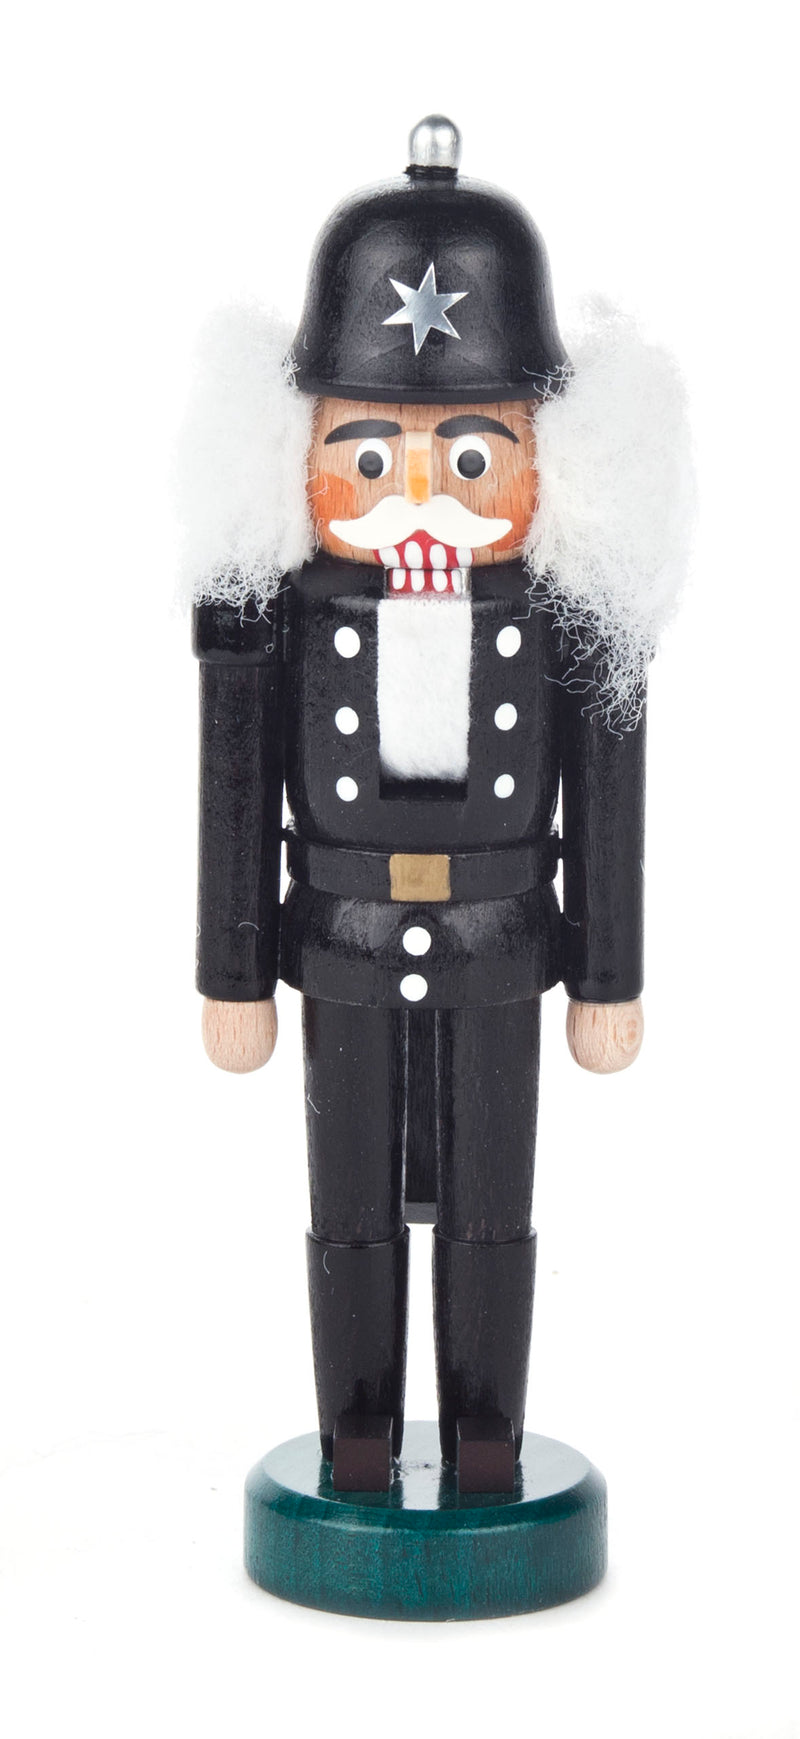 071/177 - Miniature Nutcracker - British Policeman